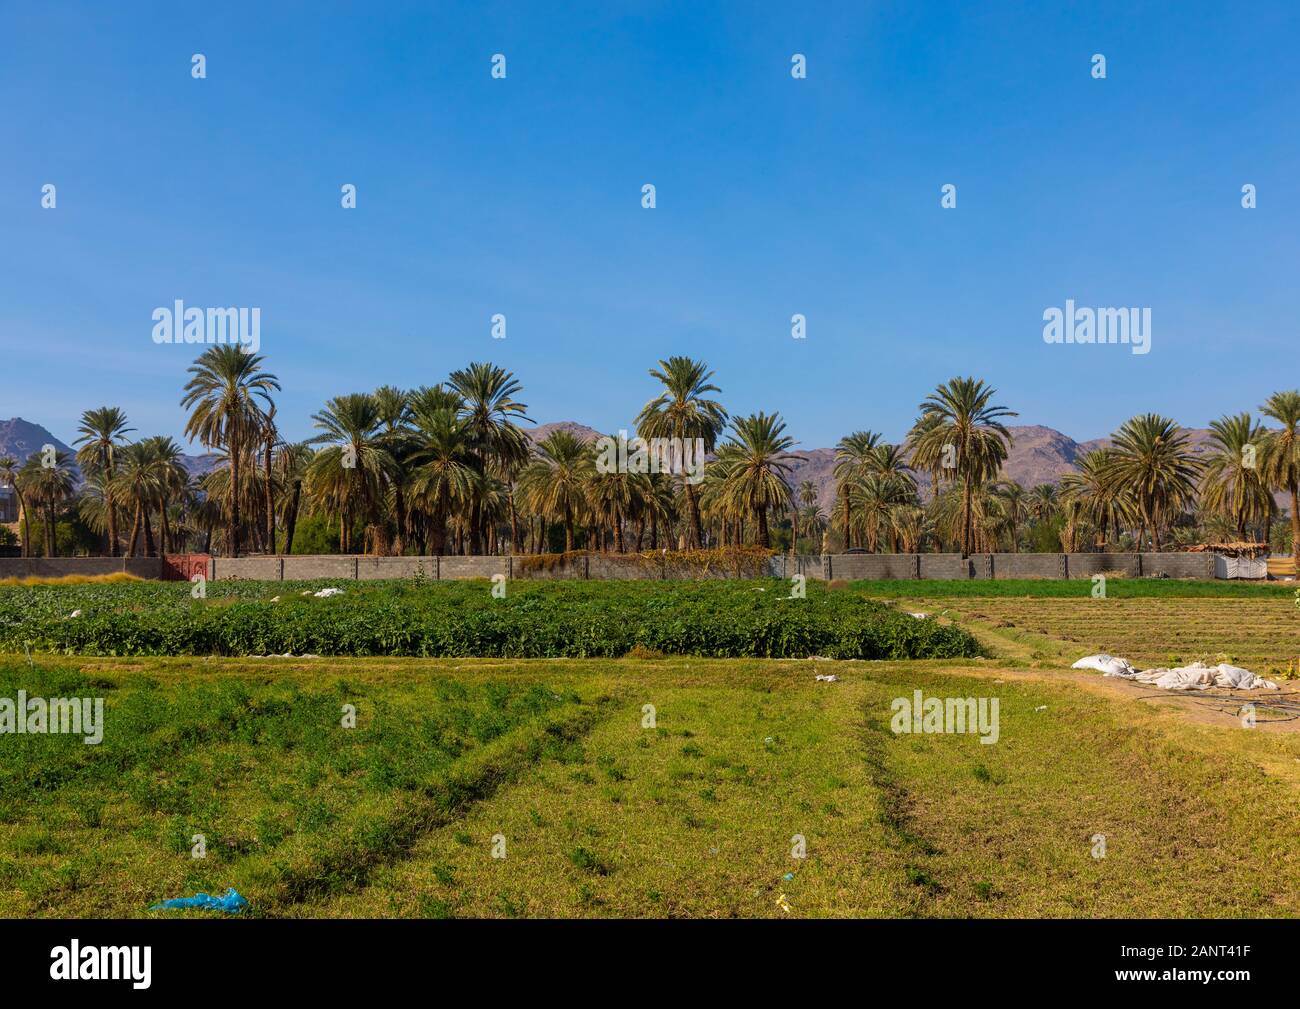 Garden and palm trees in an oasis, Najran Province, Najran, Saudi Arabia Stock Photo